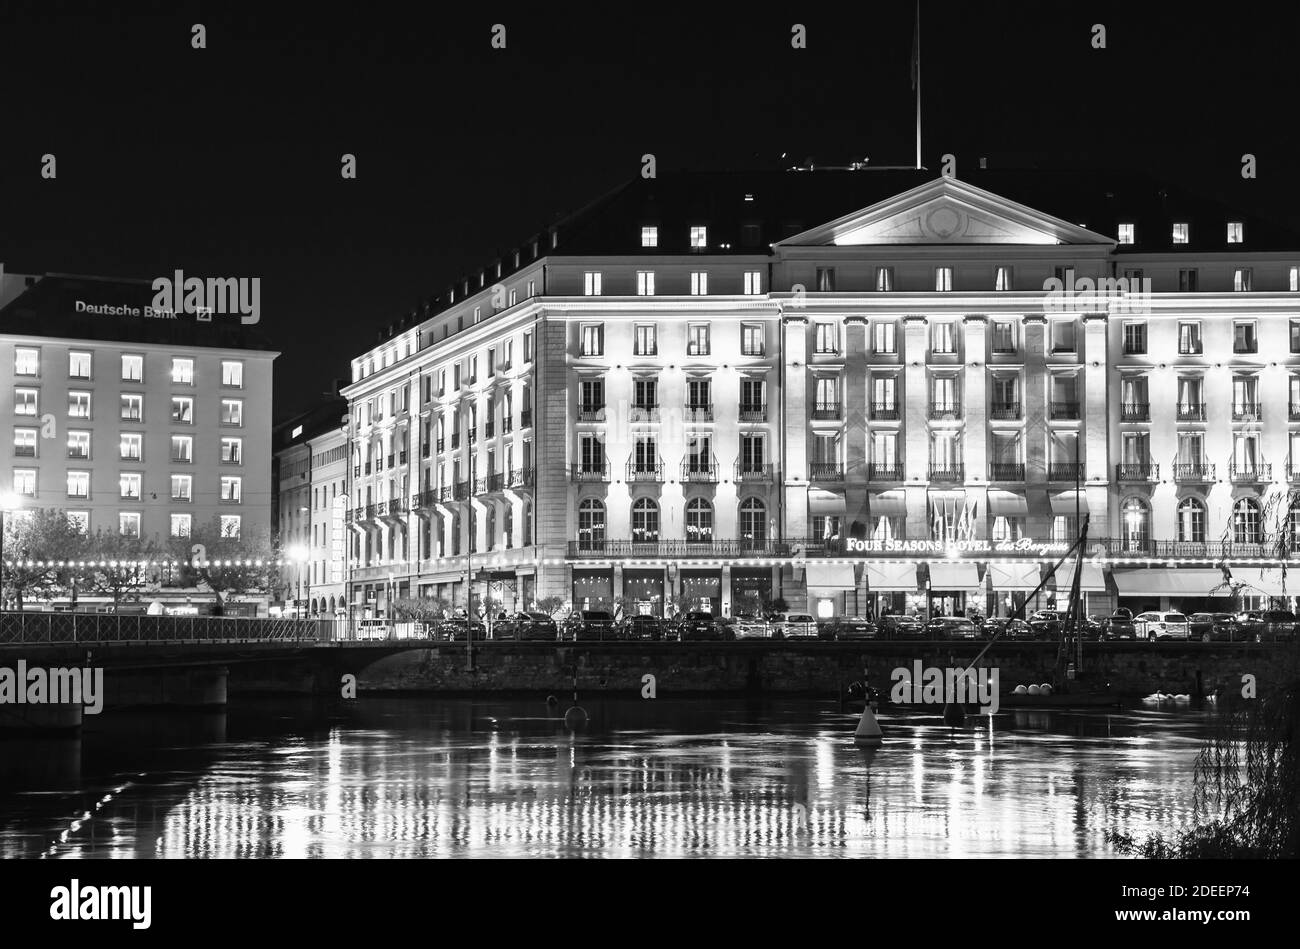 Geneva, Switzerland - November 24, 2016: Night cityscape with illuminated facade of Four Seasons Hotel, black and white photo Stock Photo